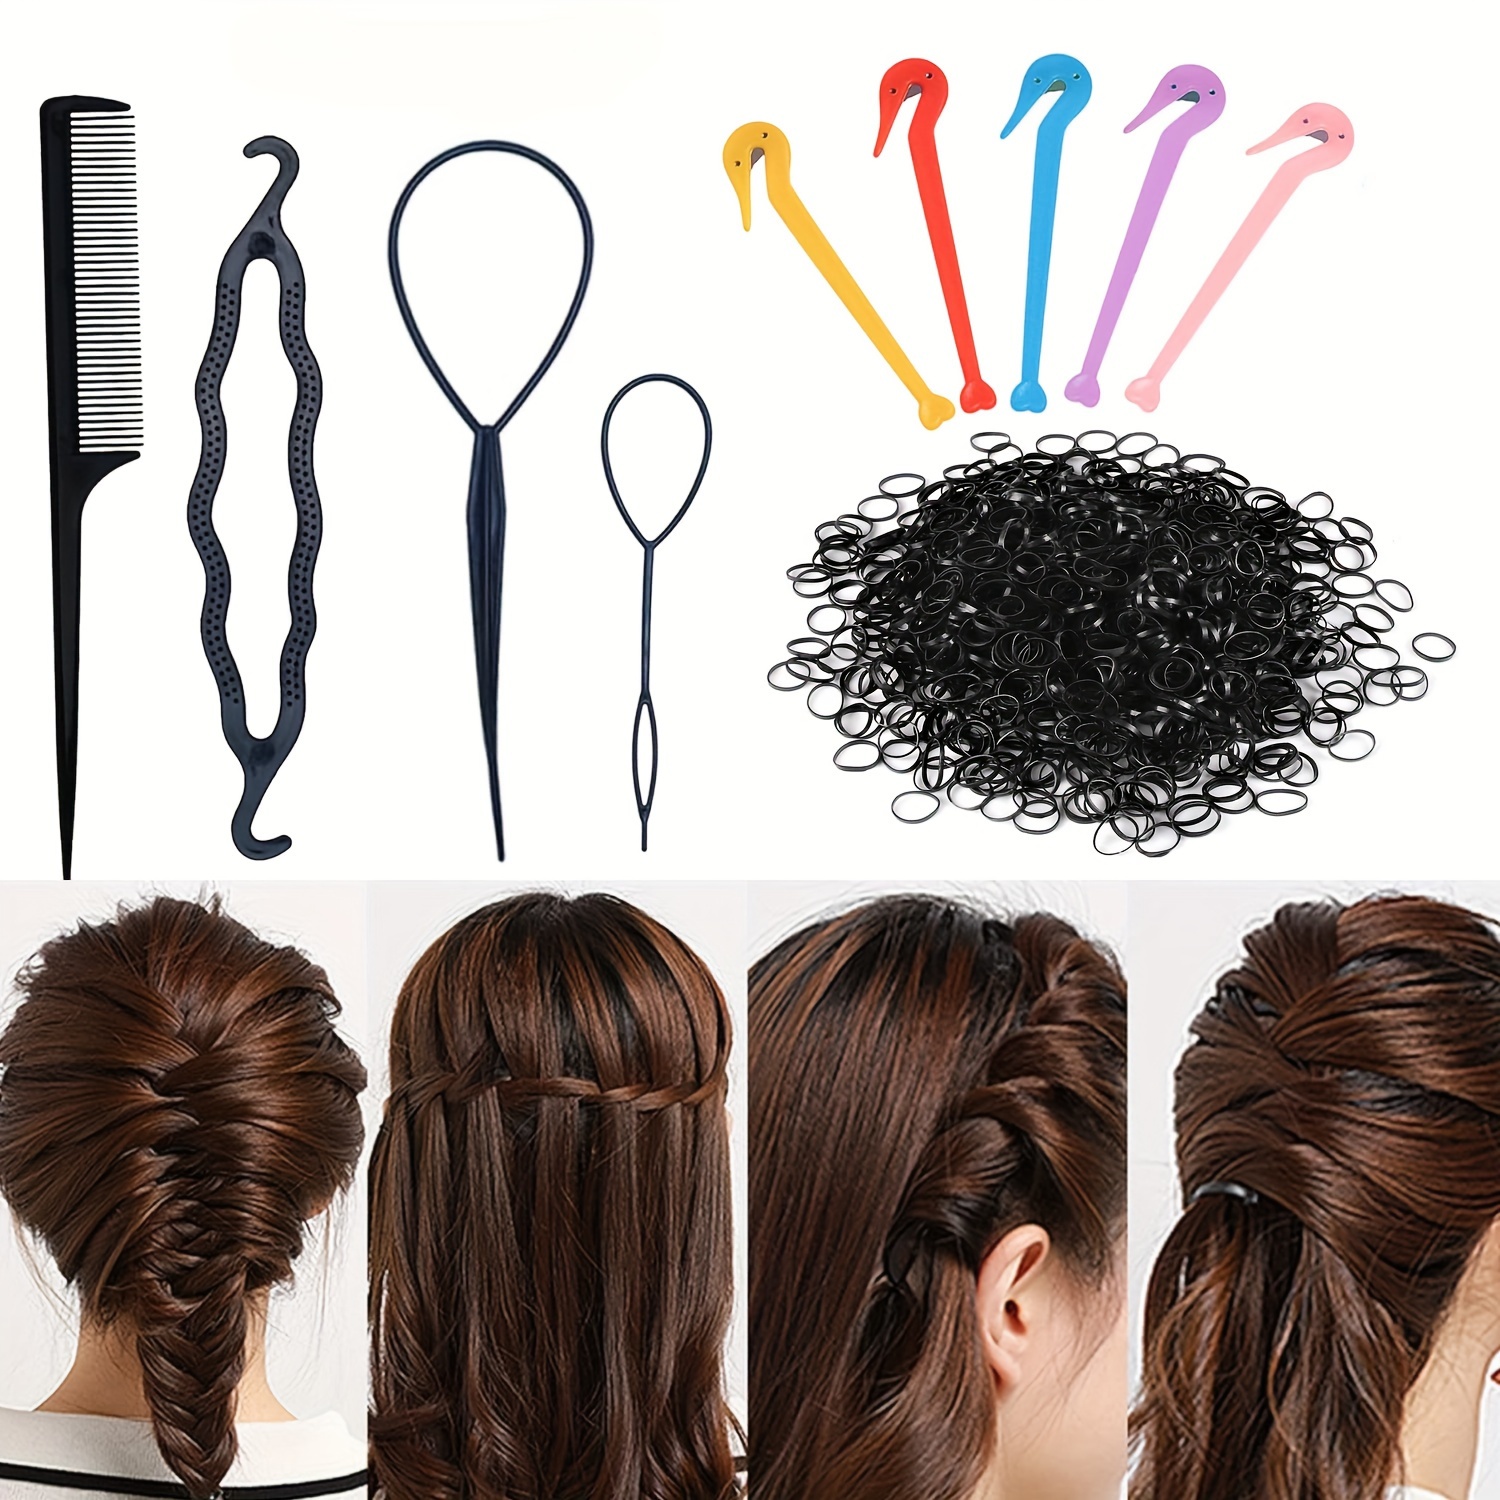 2pcs/set Hair Loop Styling Tool Hair Braiding Tools Hair Accessories For  Women Lady